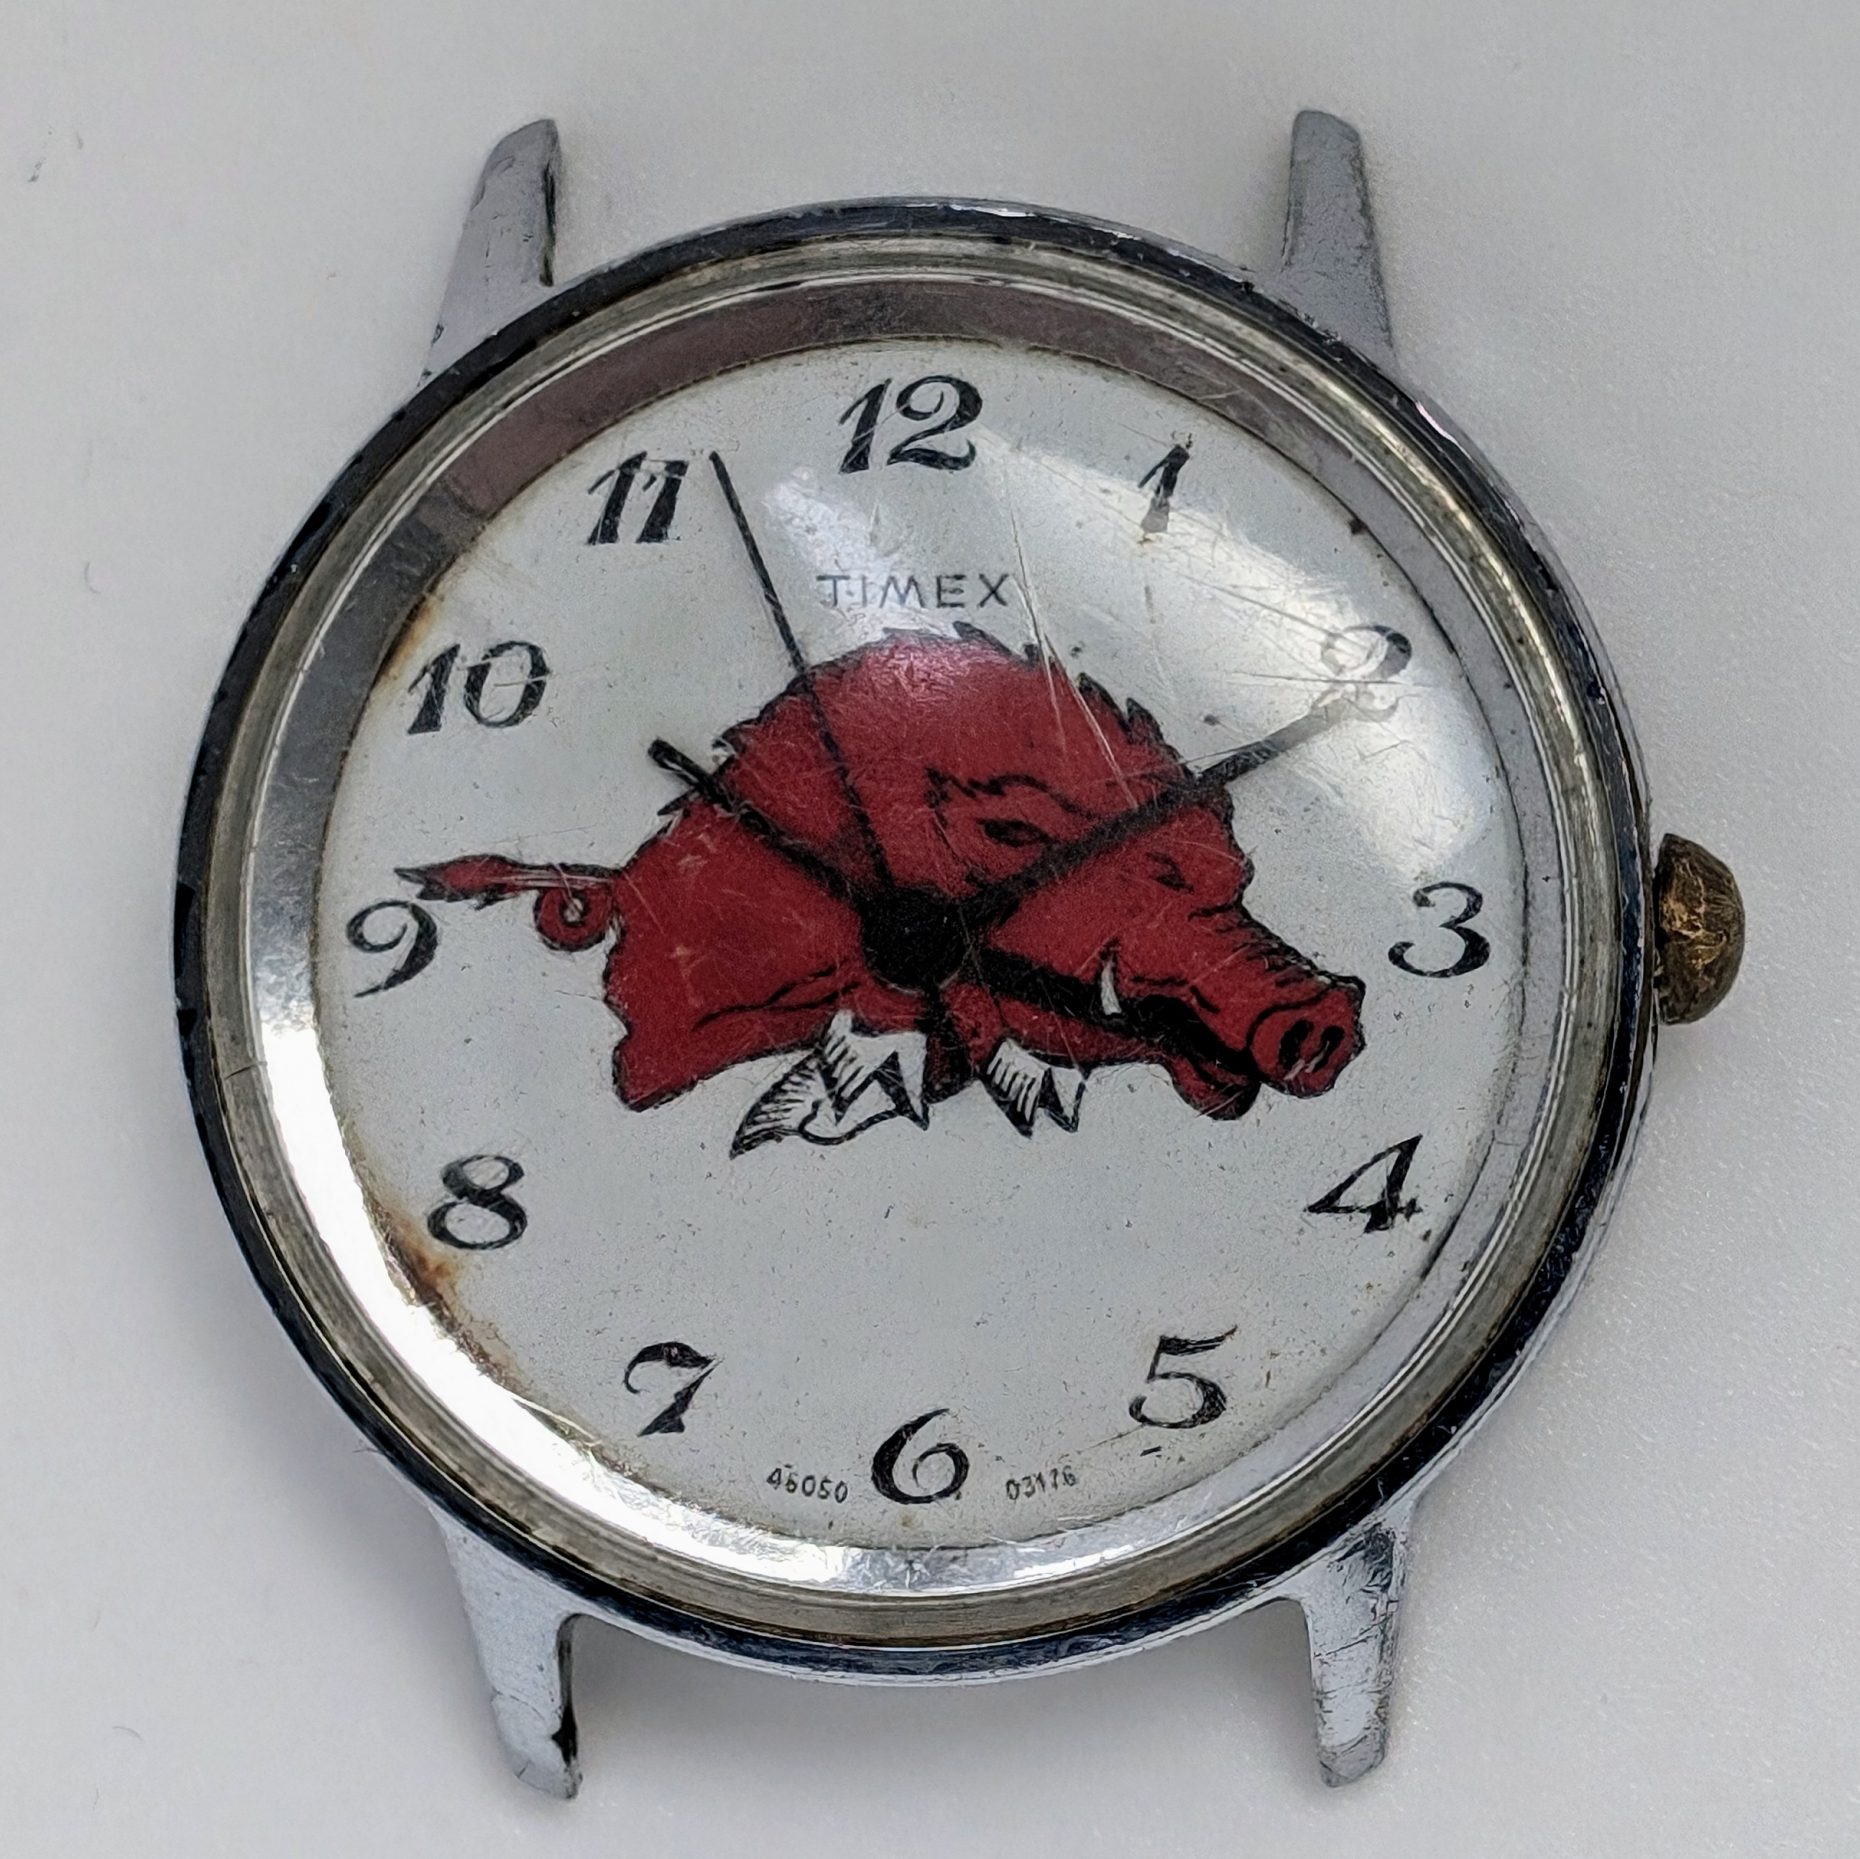 Timex Razorback 46050 03176 1976 Viscount watch